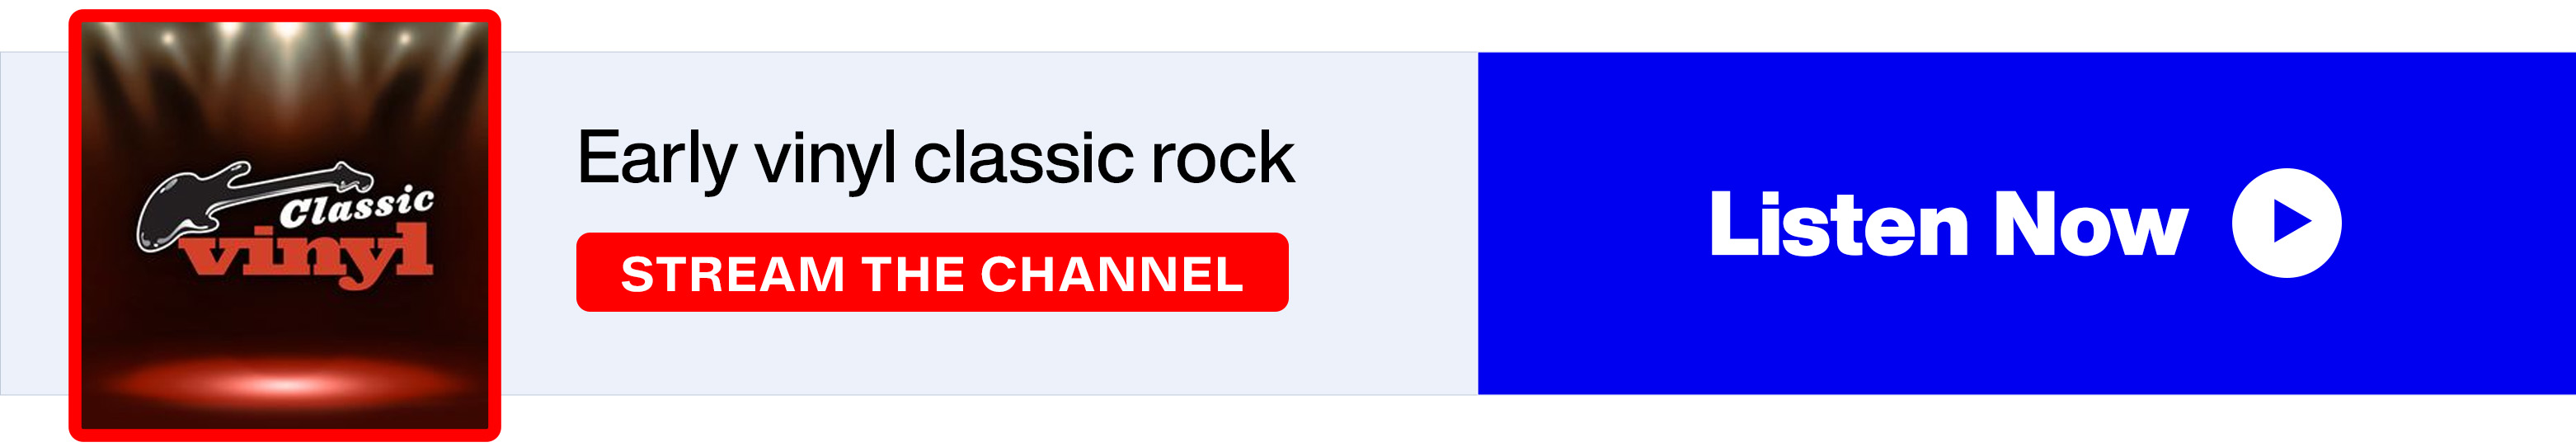 SiriusXM Classic Vinyl - Early vinyl classic rock - Stream the Channel - Listen Now banner